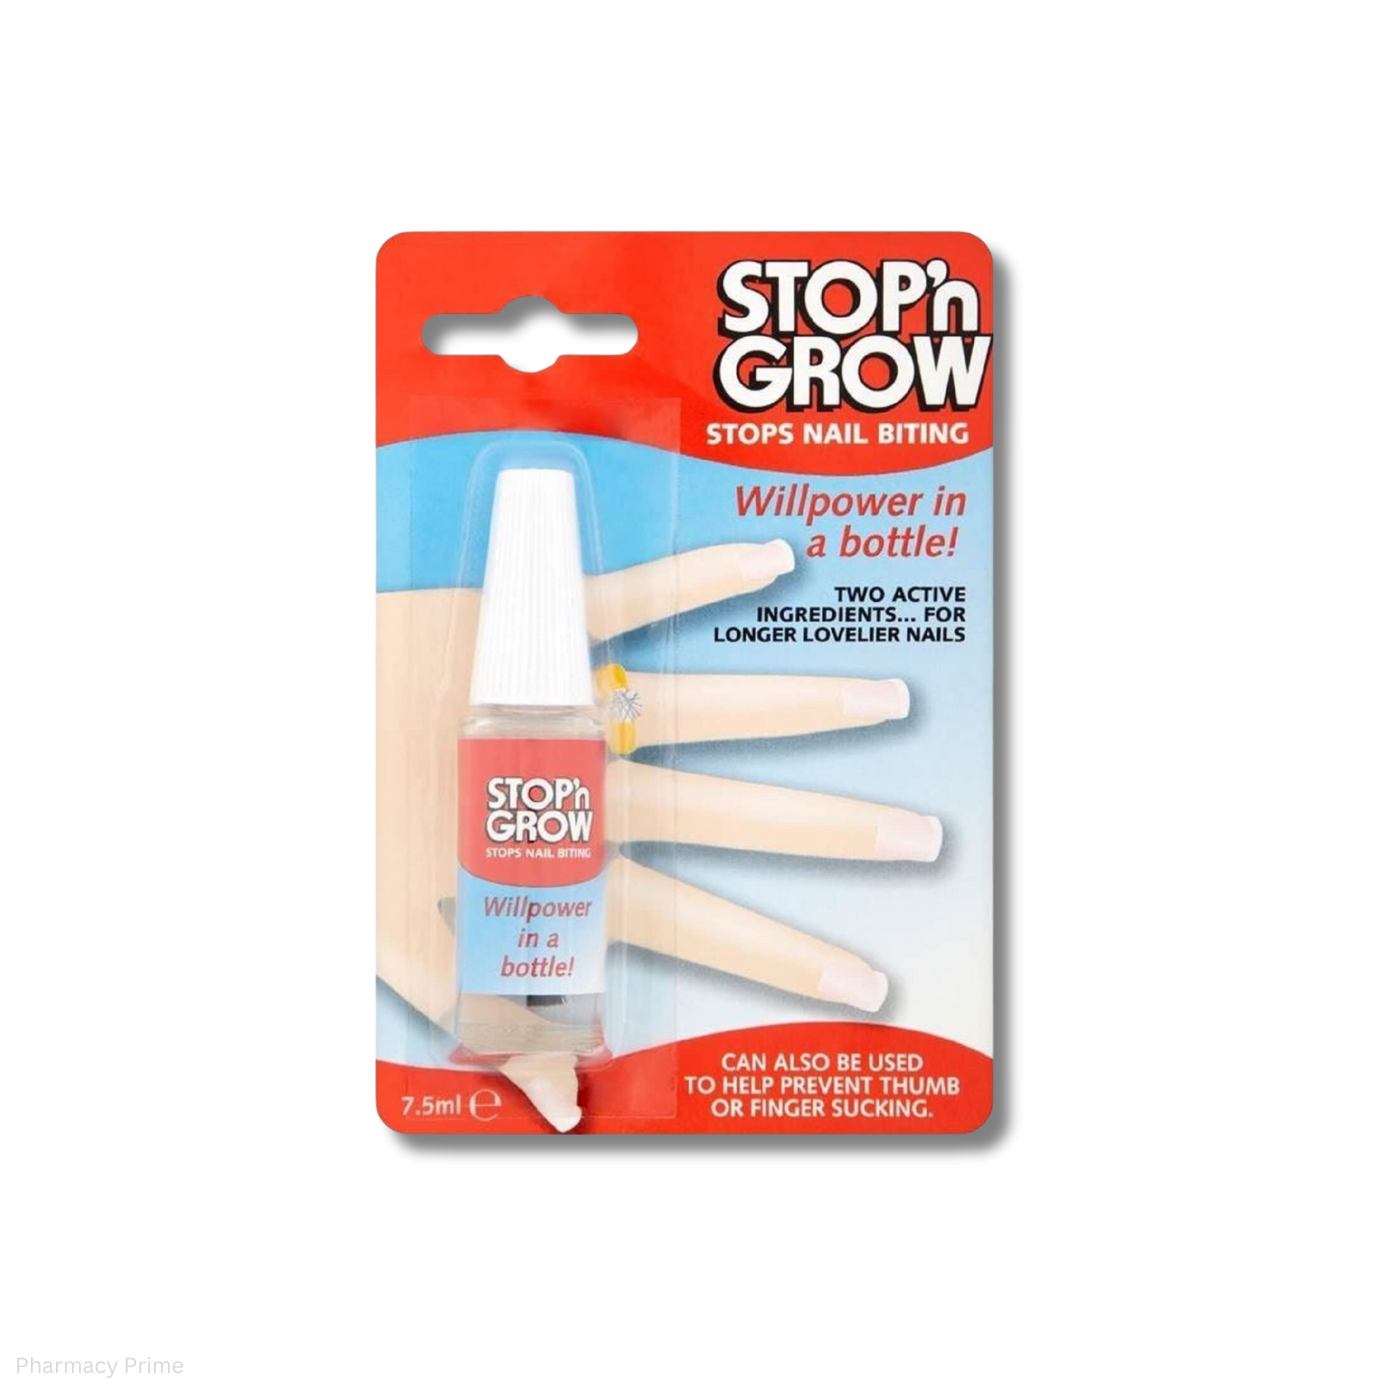 Stop & Grow Stop Biting Nail Solution